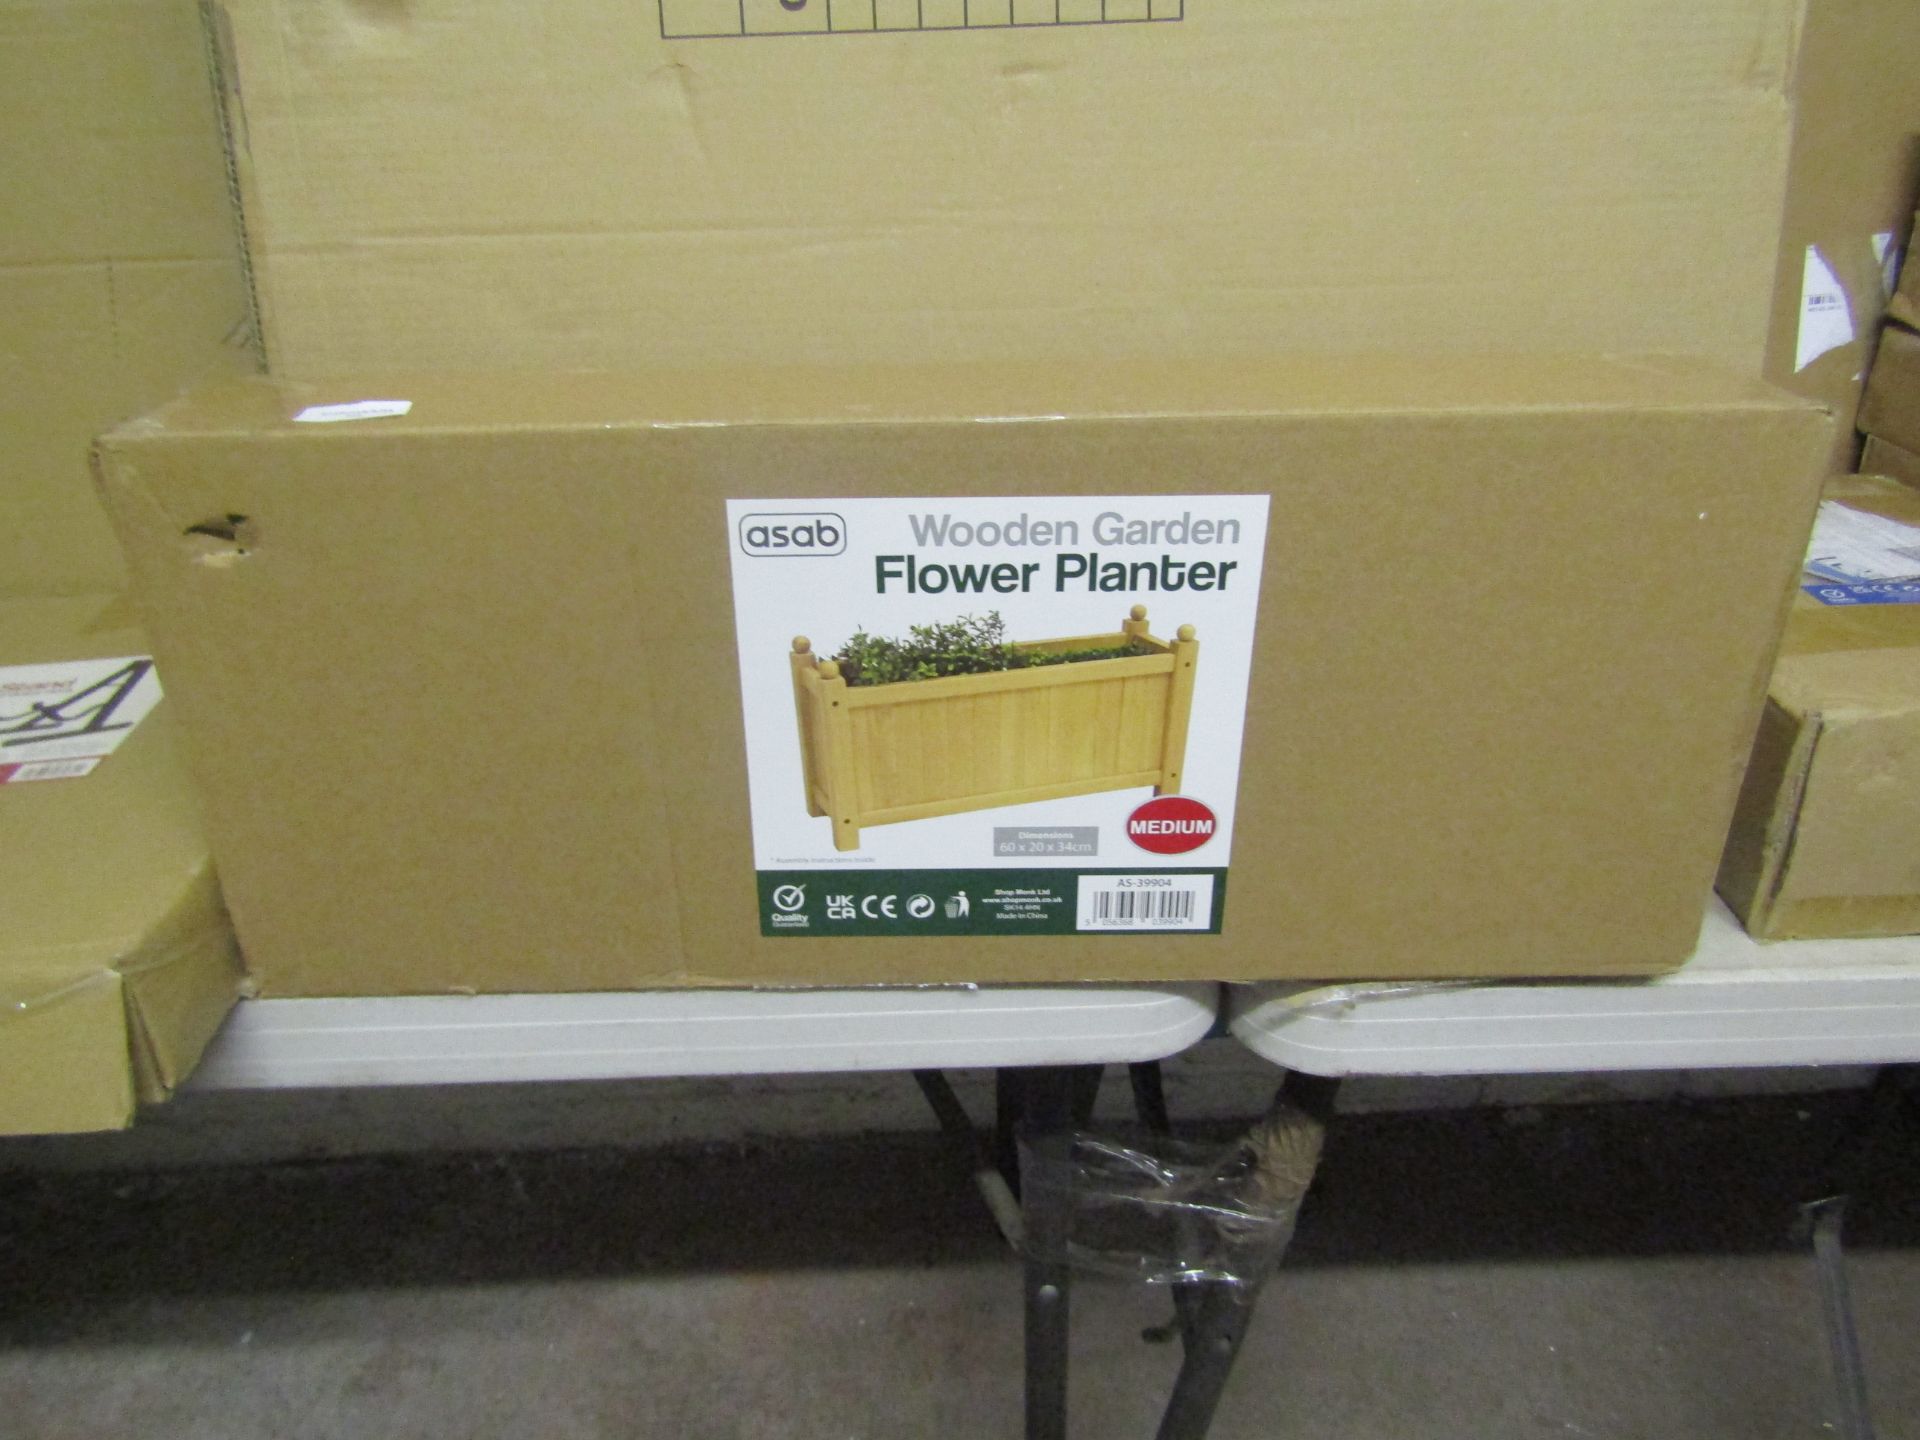 Asab Medium Wooden Garden Flower Planter, Size: 60x20x34cm - Unchecked & Boxed.